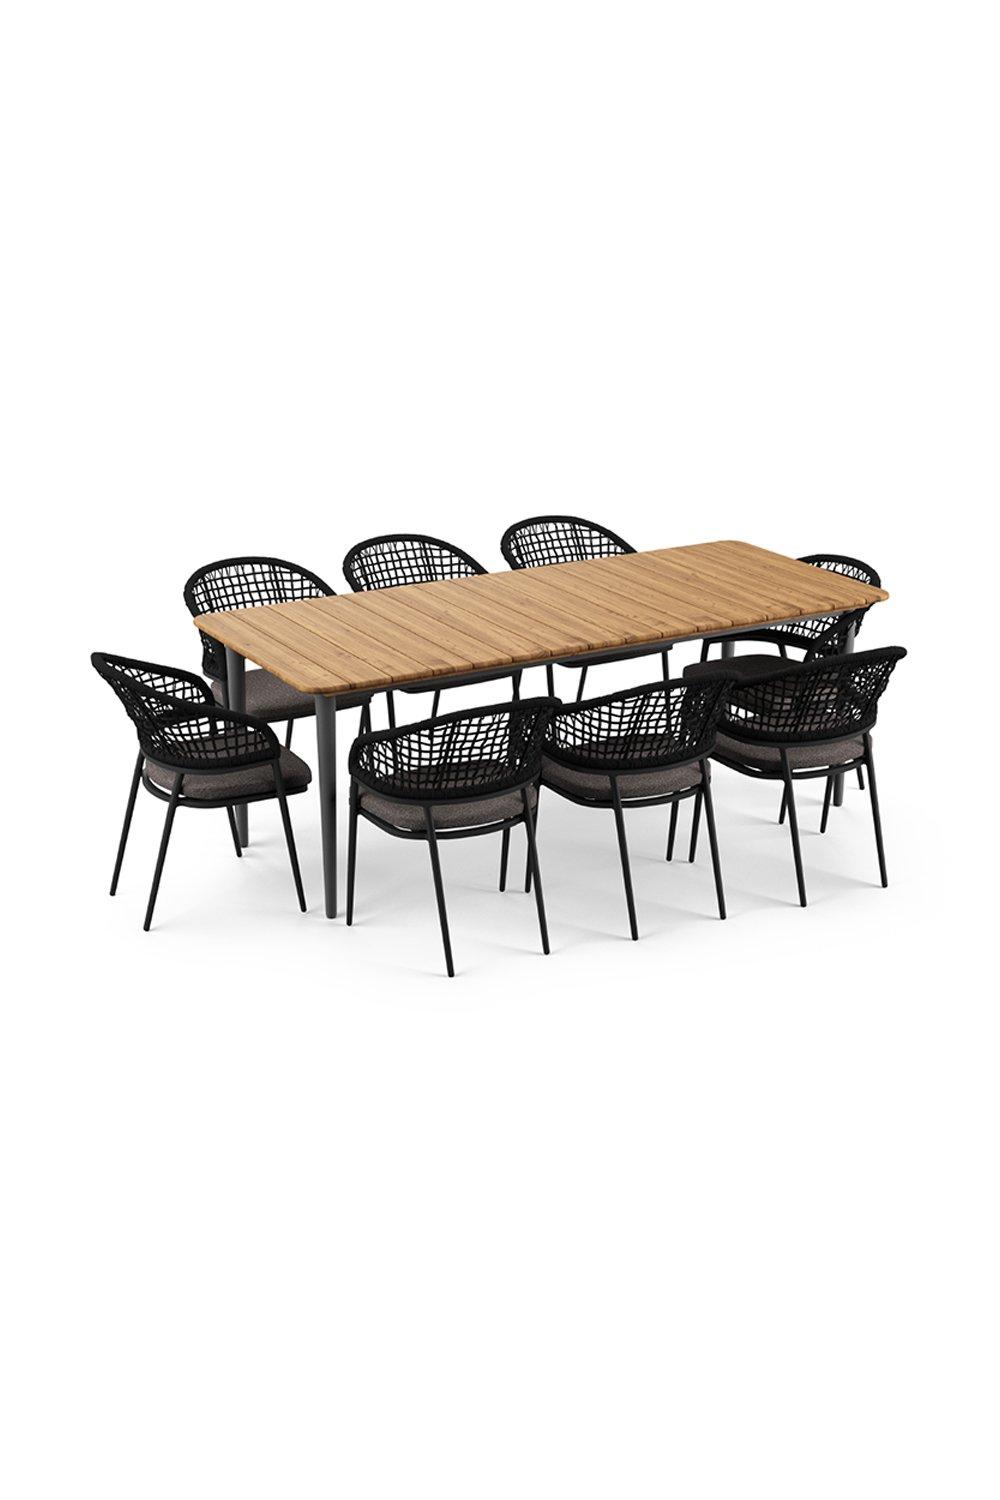 Kalama 8 Seat Rectangular Dining Set with Teak Table in Charcoal